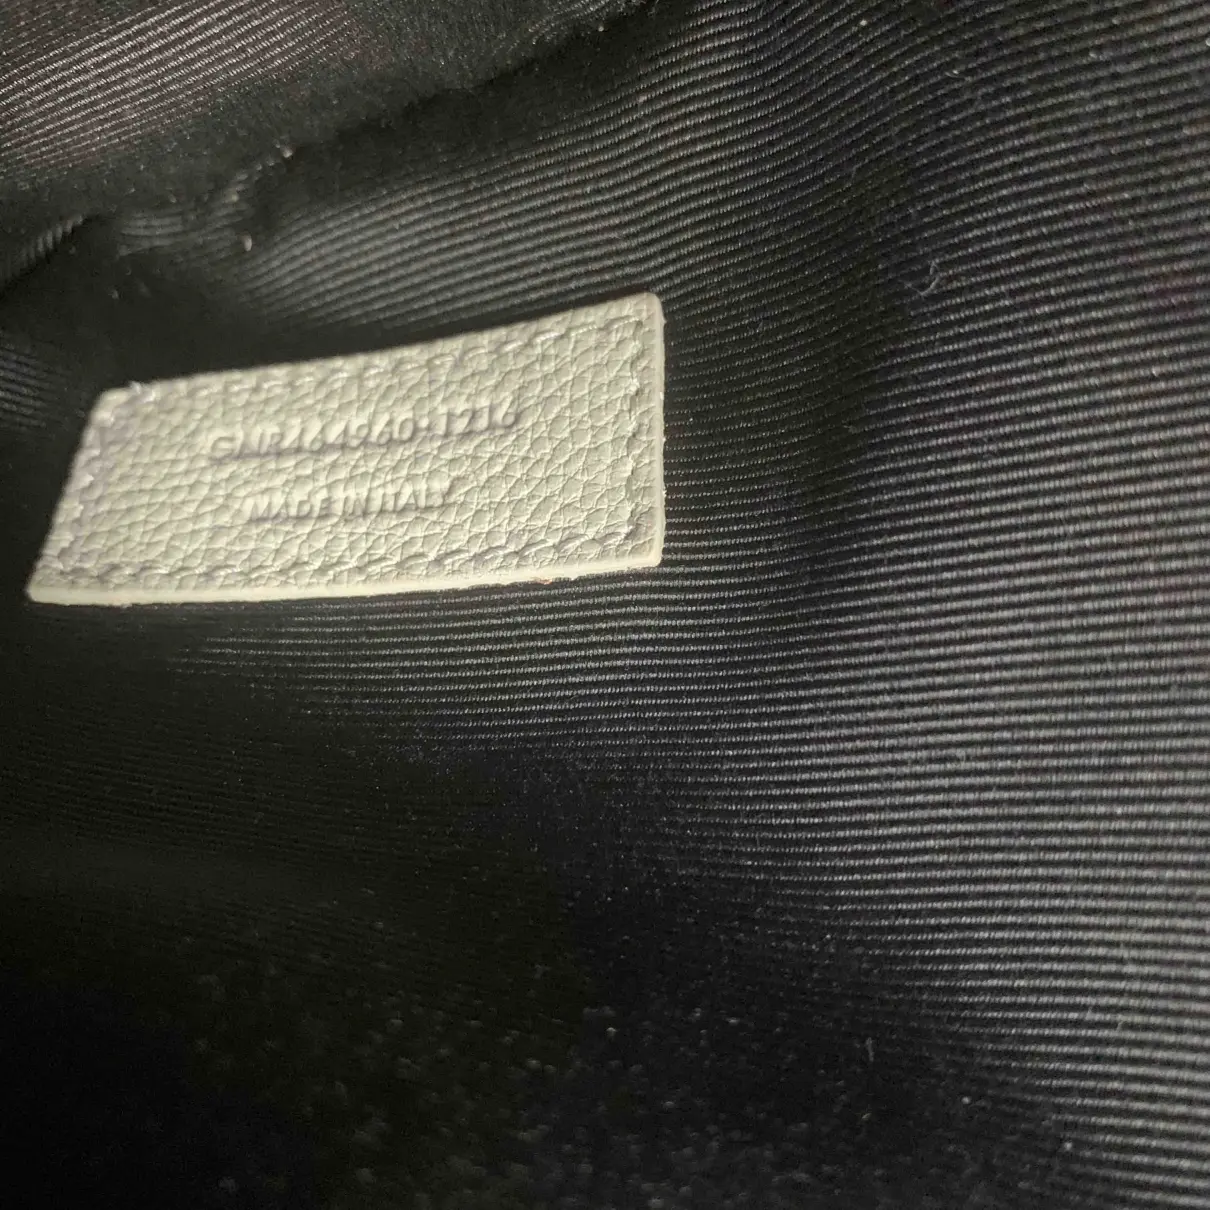 Buy Saint Laurent Sac de Jour leather handbag online